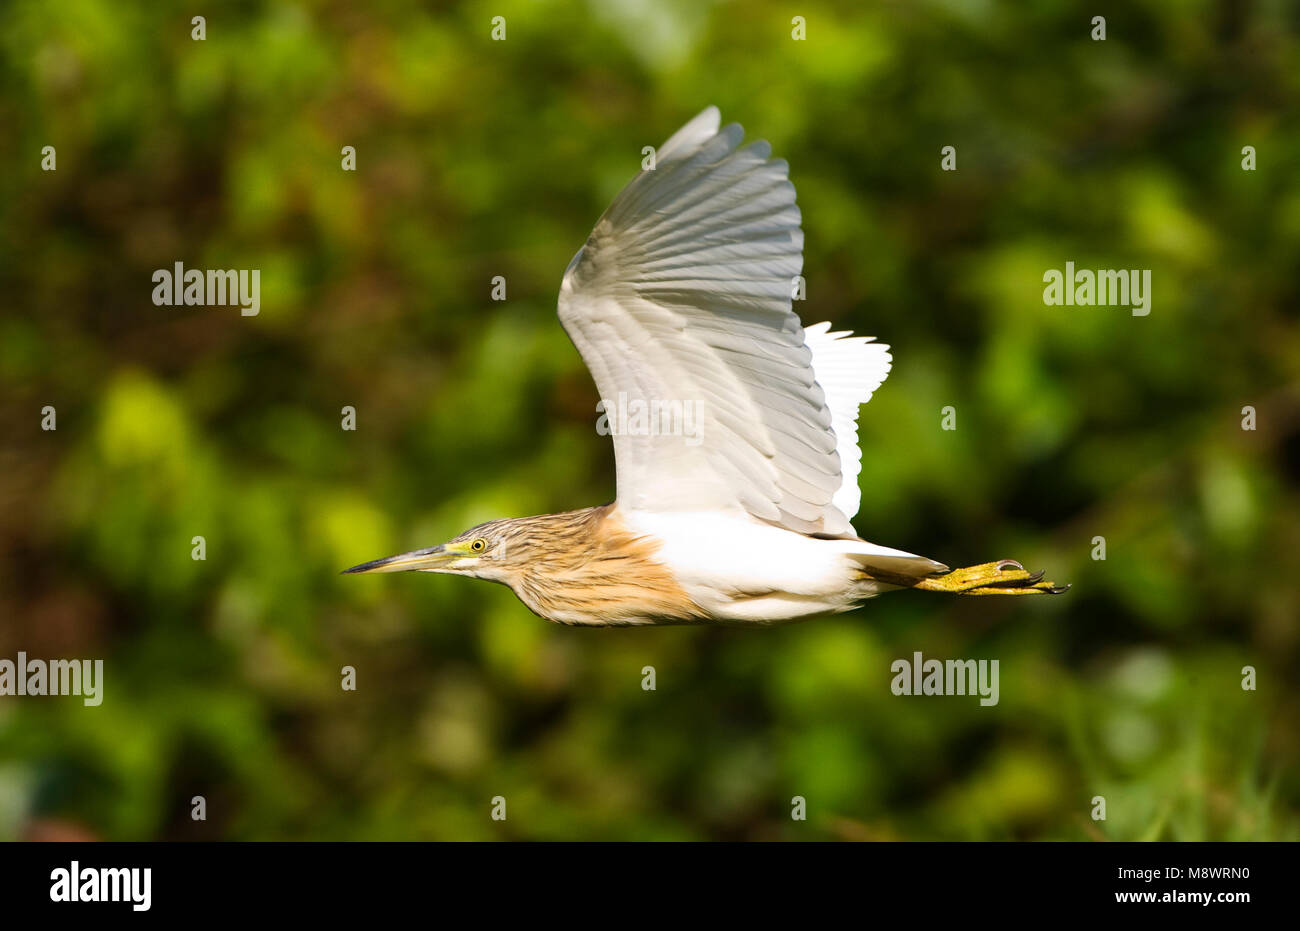 Ralreiger vliegend; Squacco Heron flying Stock Photo